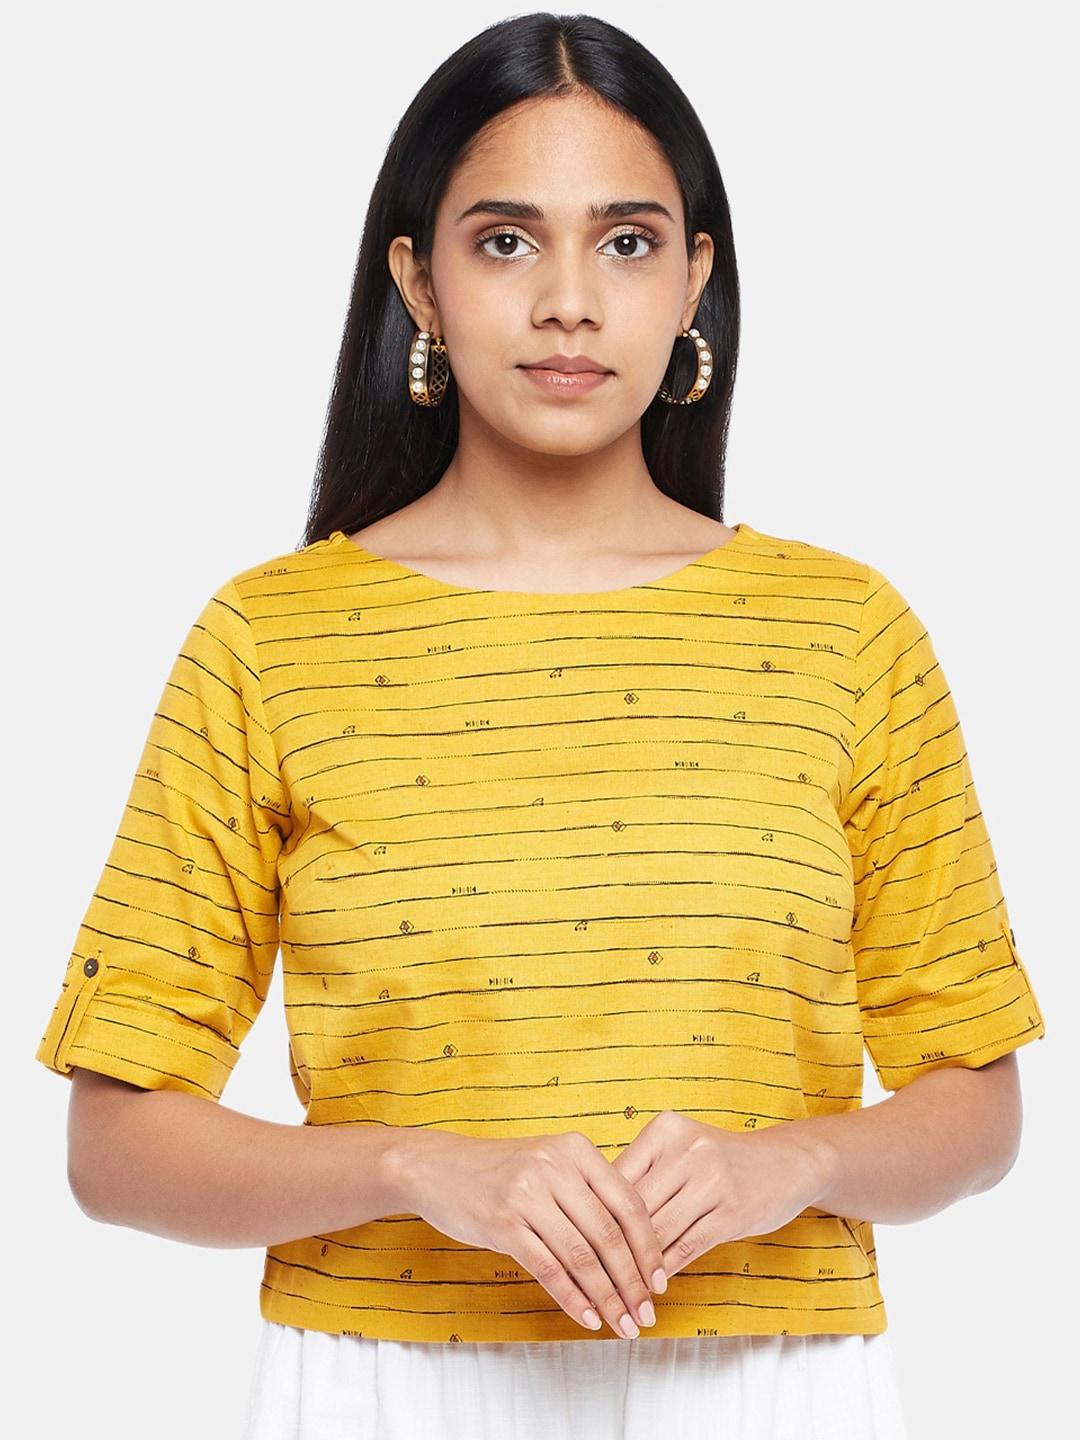 akkriti-by-pantaloons-mustard-yellow-&-black-striped-regular-top